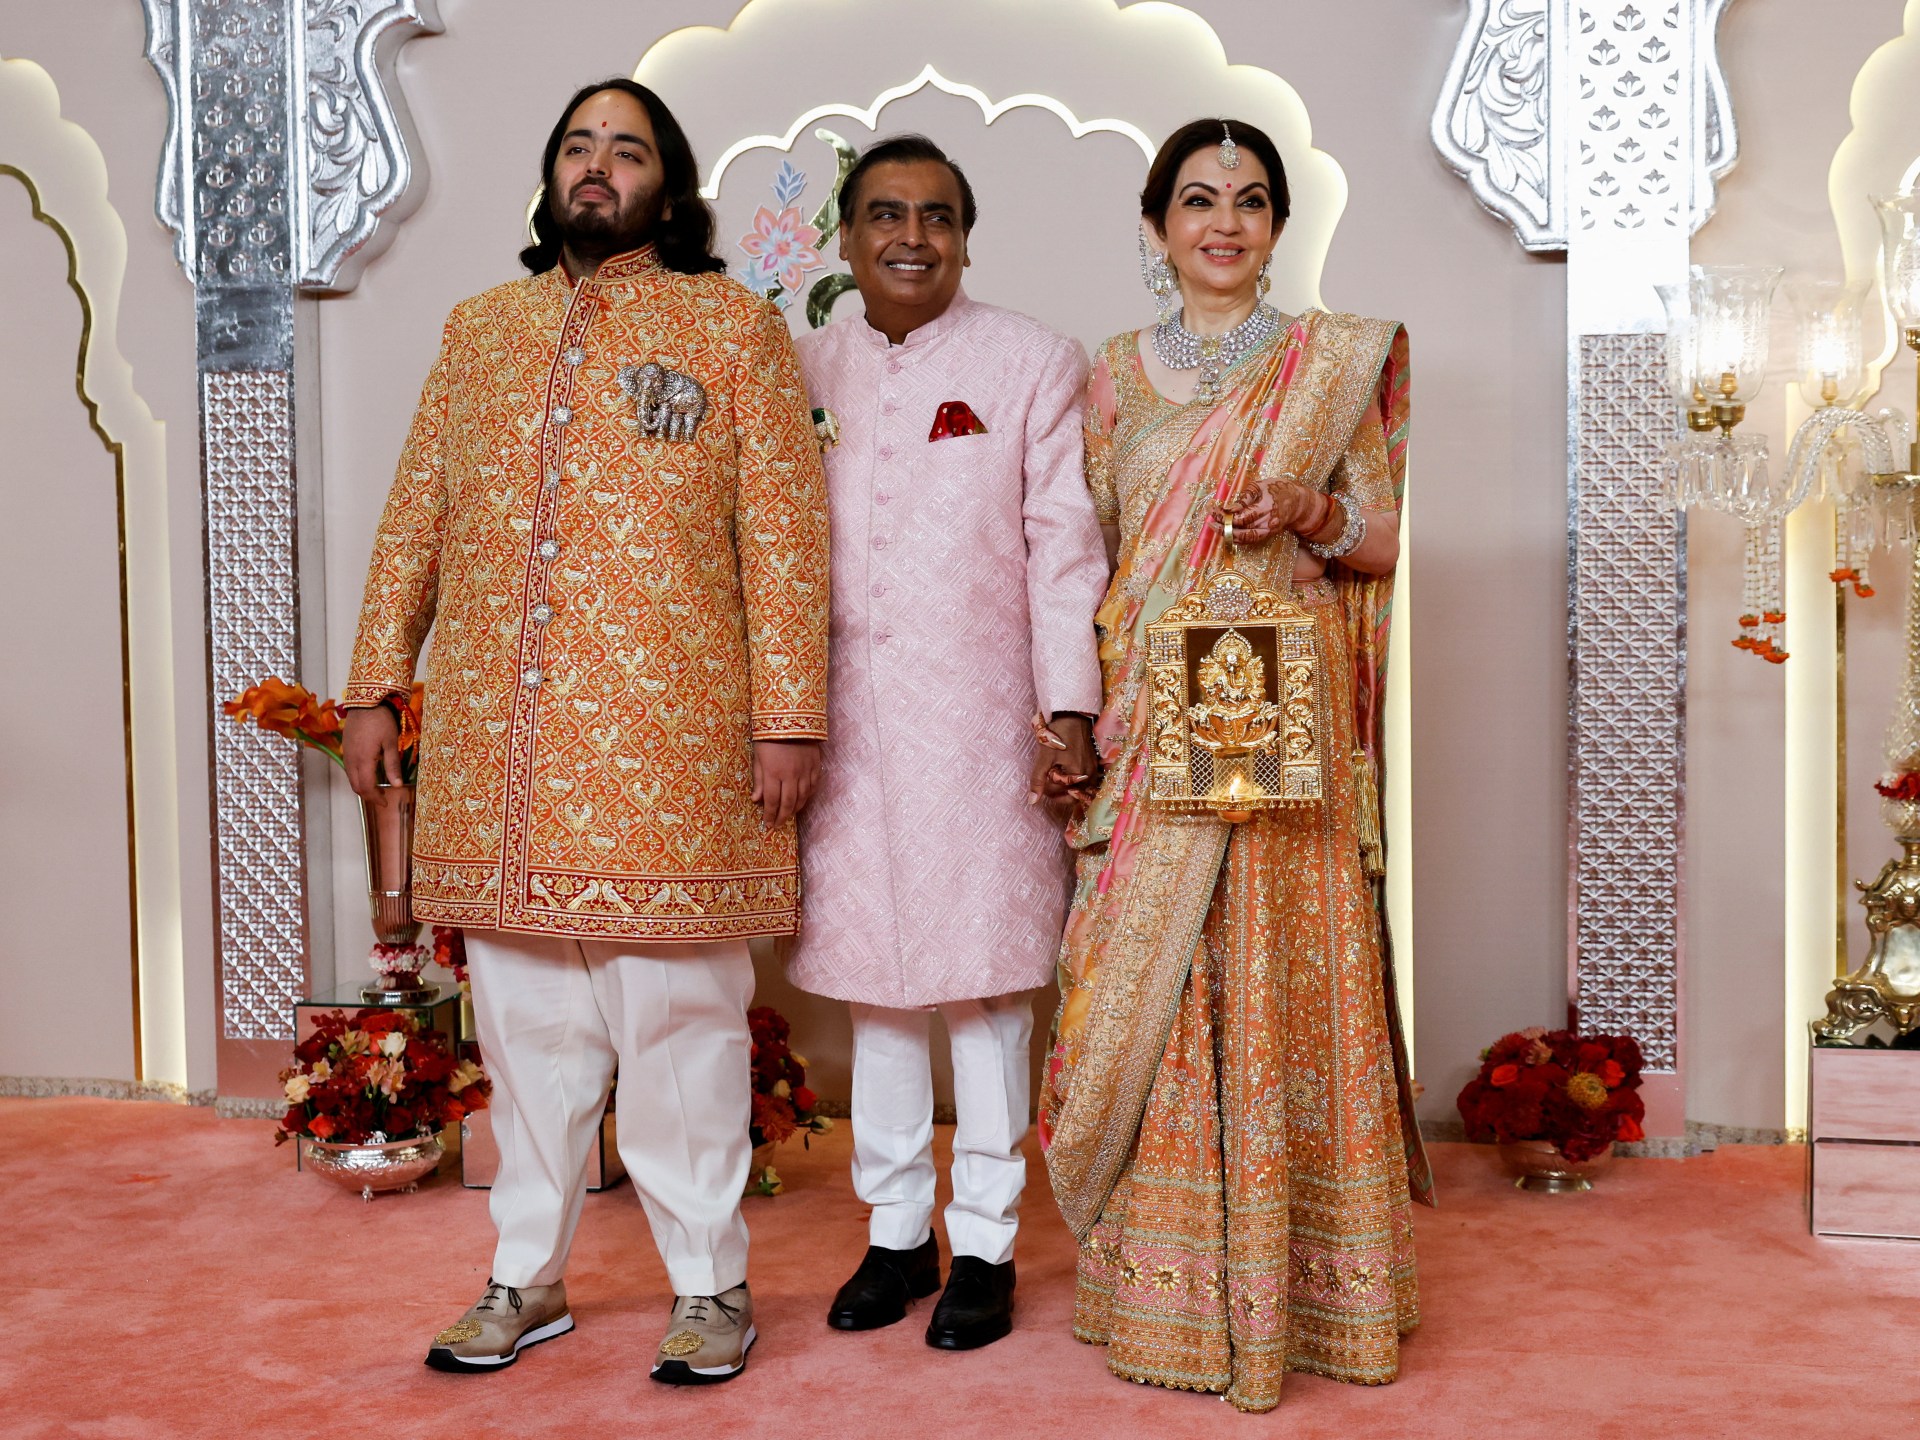 ‘Obscene’ amounts spent at Indian billionaire Ambani’s son’s wedding | Business and Economy News